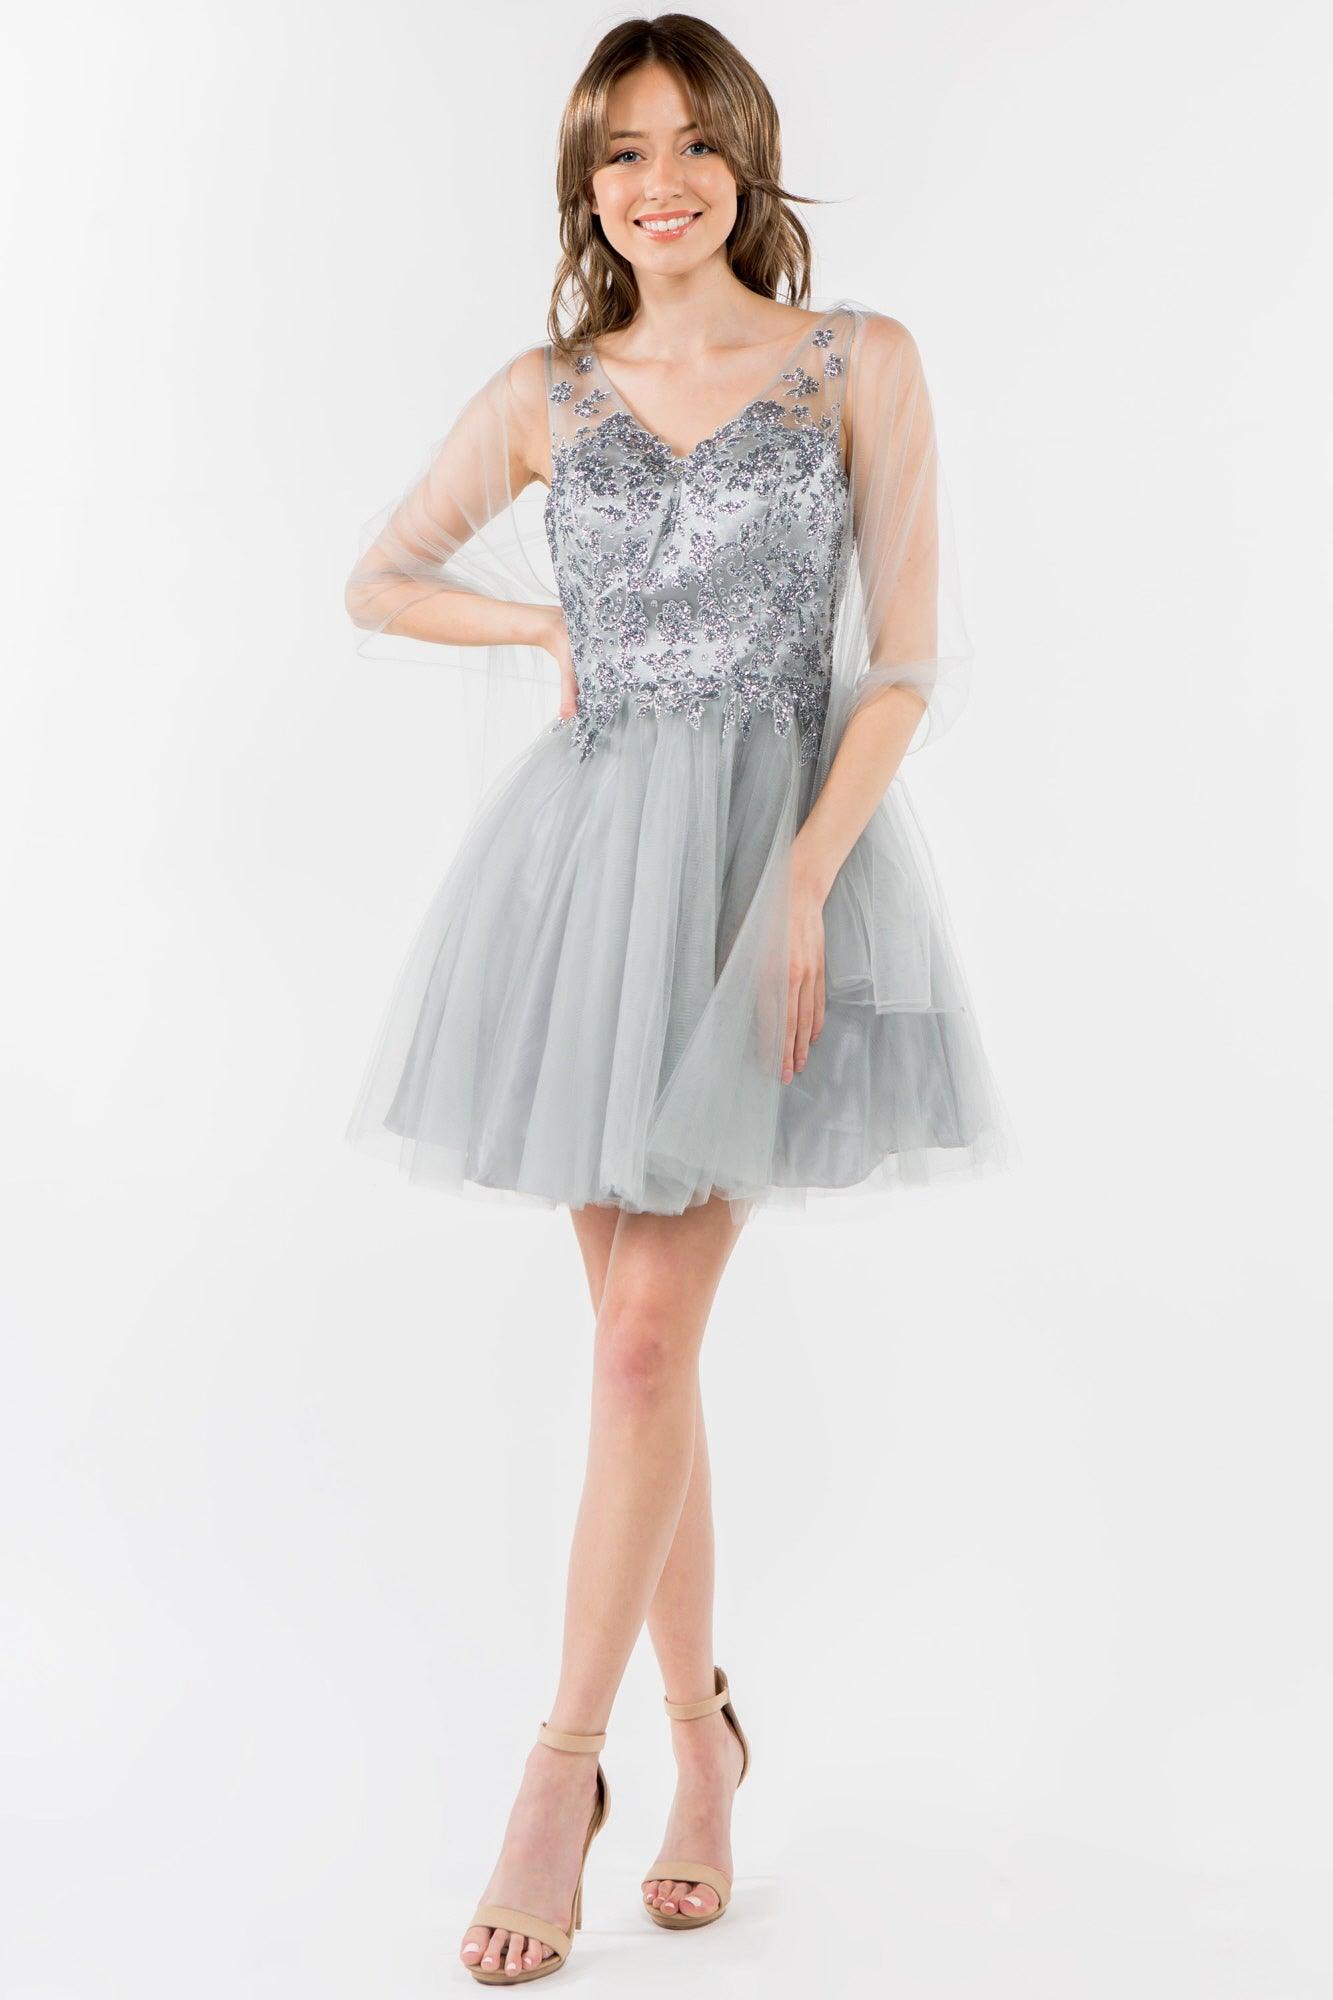 Glitter A Line Short Homecoming Dress - The Dress Outlet